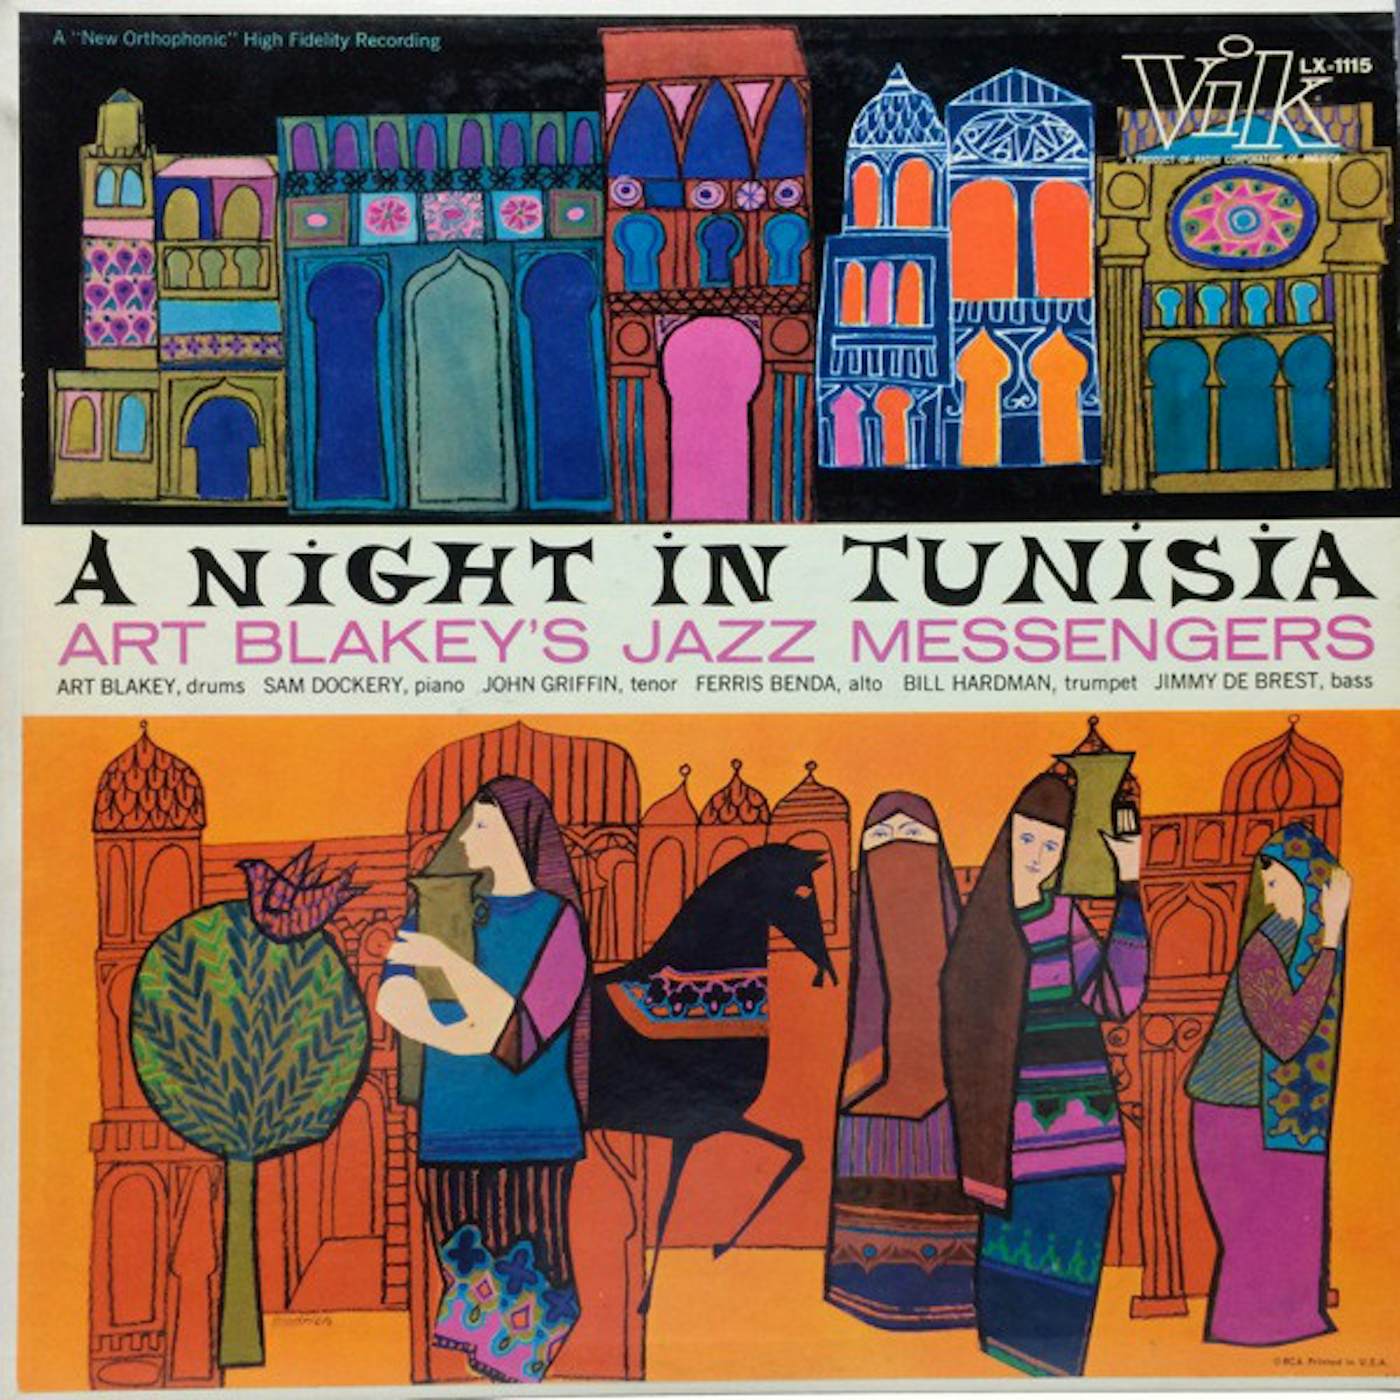 Art Blakey & The Jazz Messengers NIGHT IN TUNISIA Vinyl Record